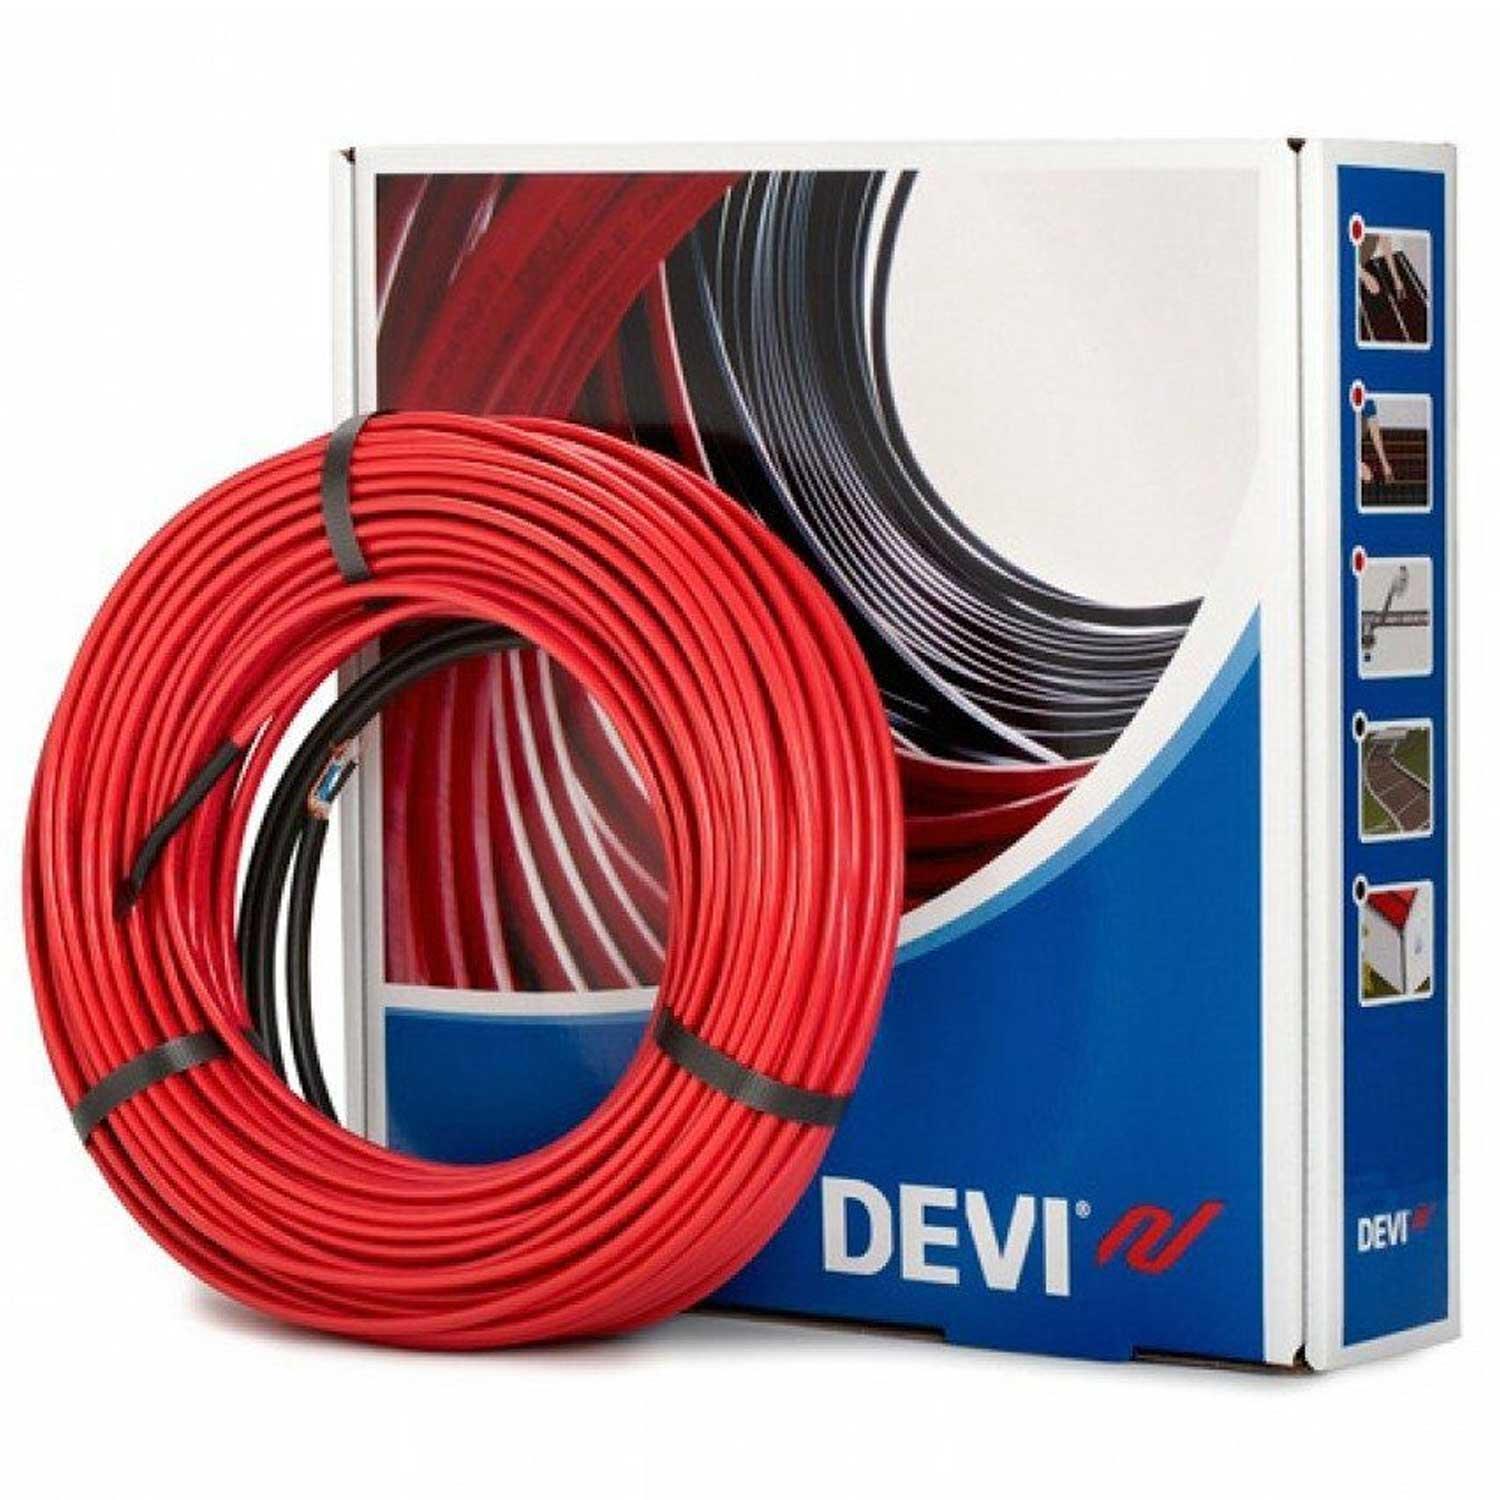 DEVIFlex DTIR-10 Underfloor Heating Cable